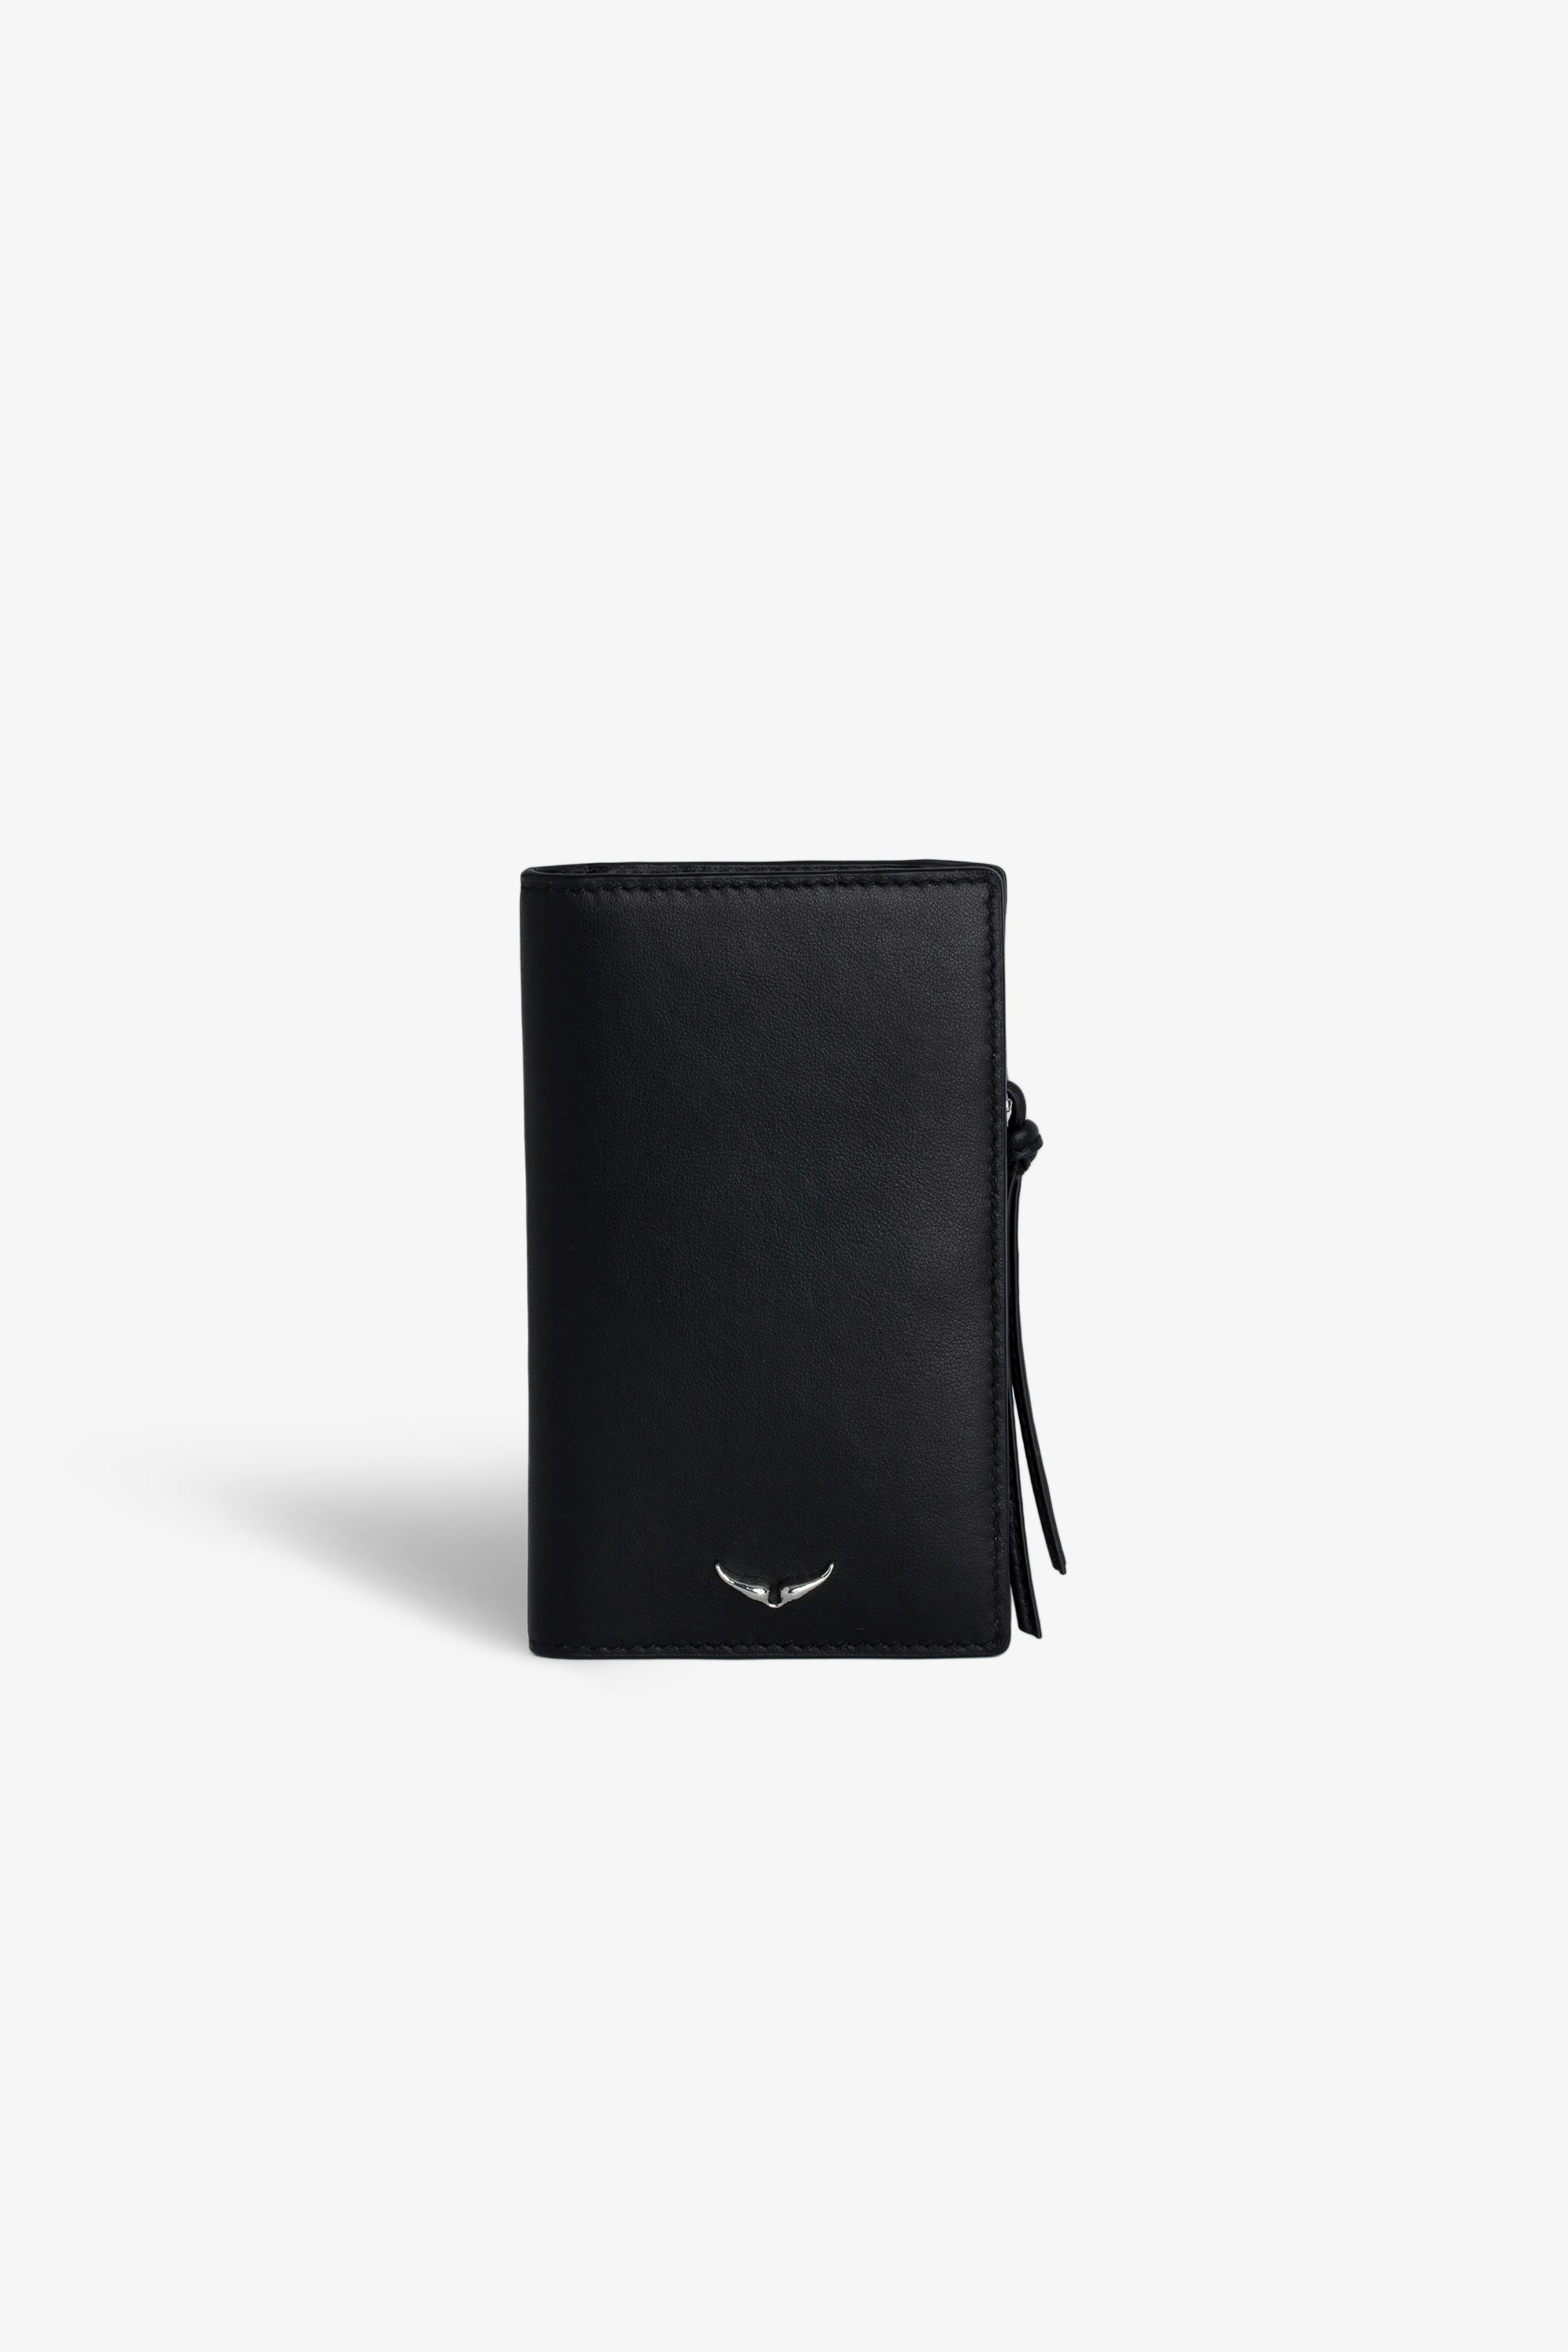 Compact Eternal Card Holder - Smooth black leather card holder.